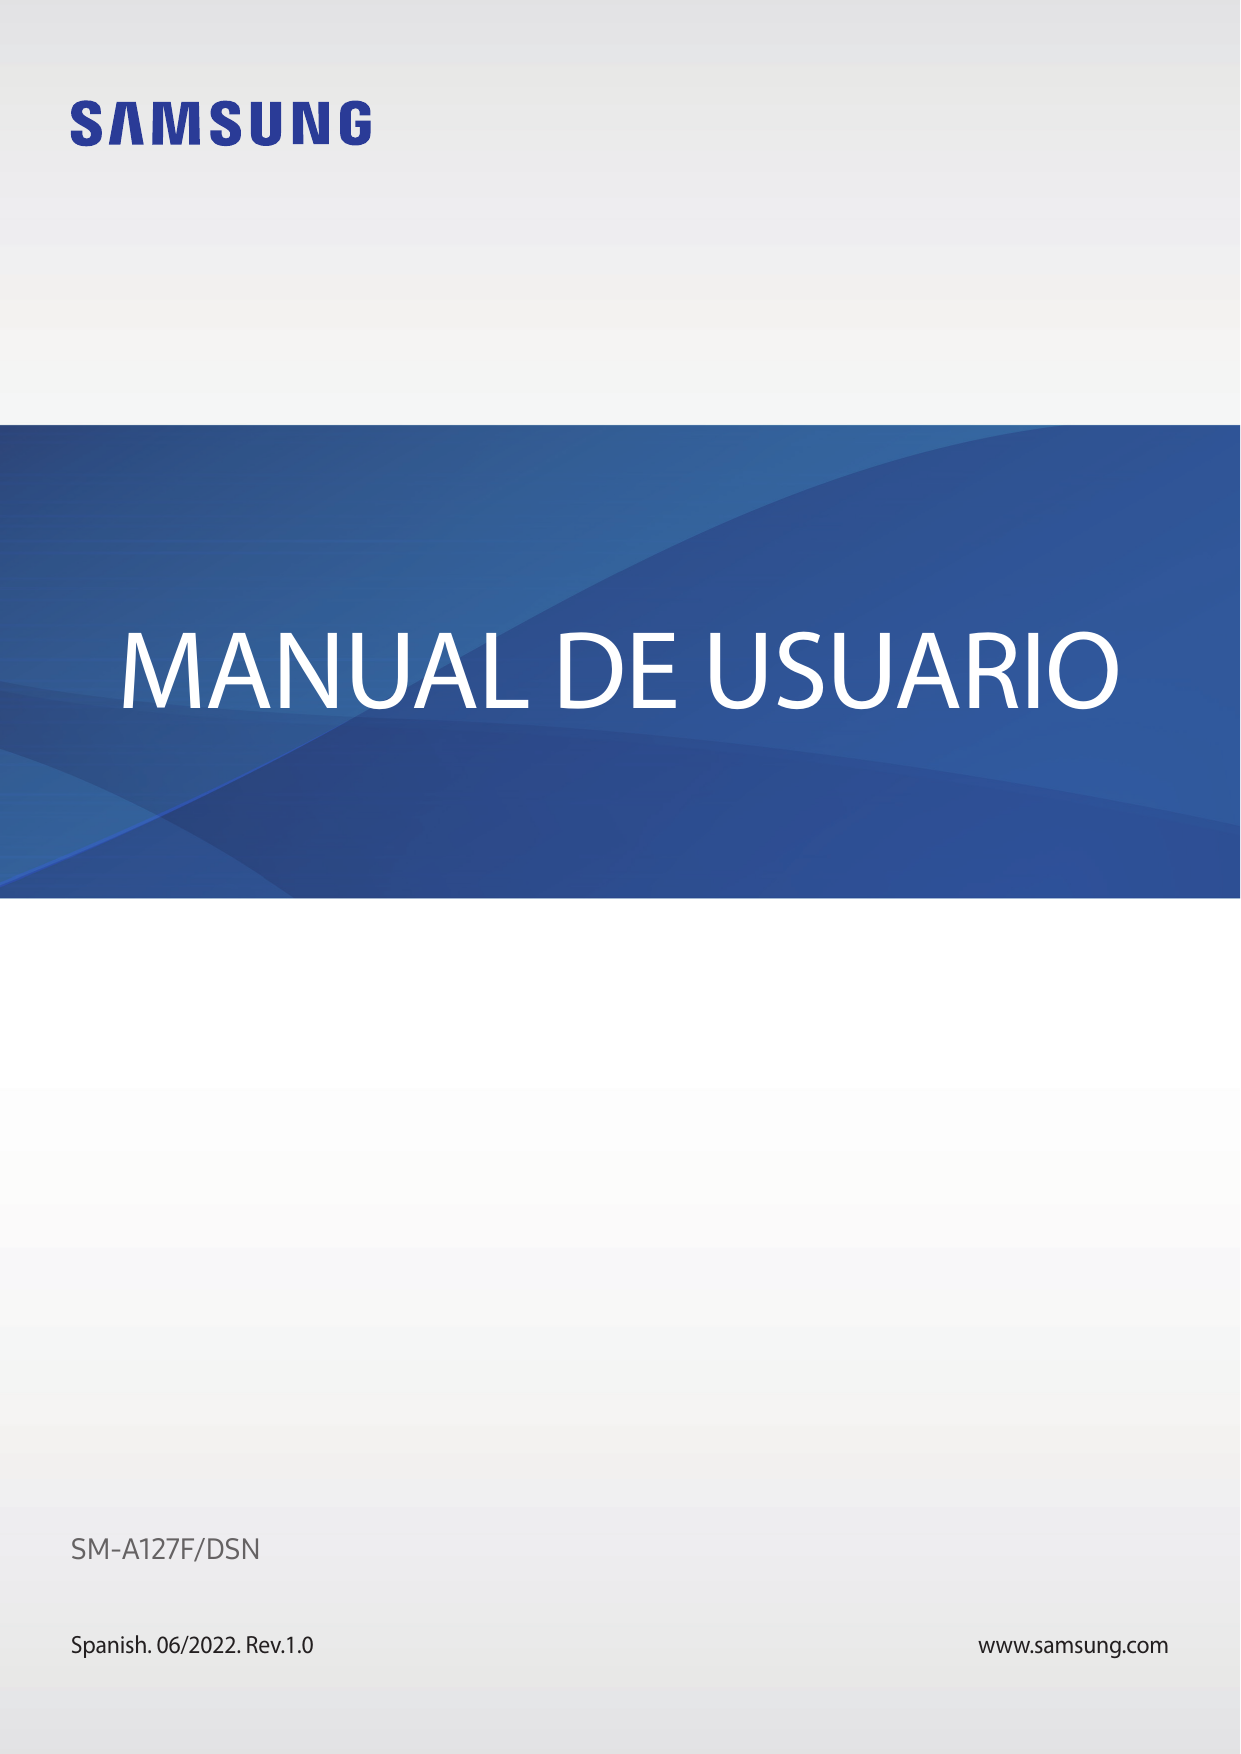 MANUAL DE USUARIOSM-A127F/DSNSpanish. 06/2022. Rev.1.0www.samsung.com